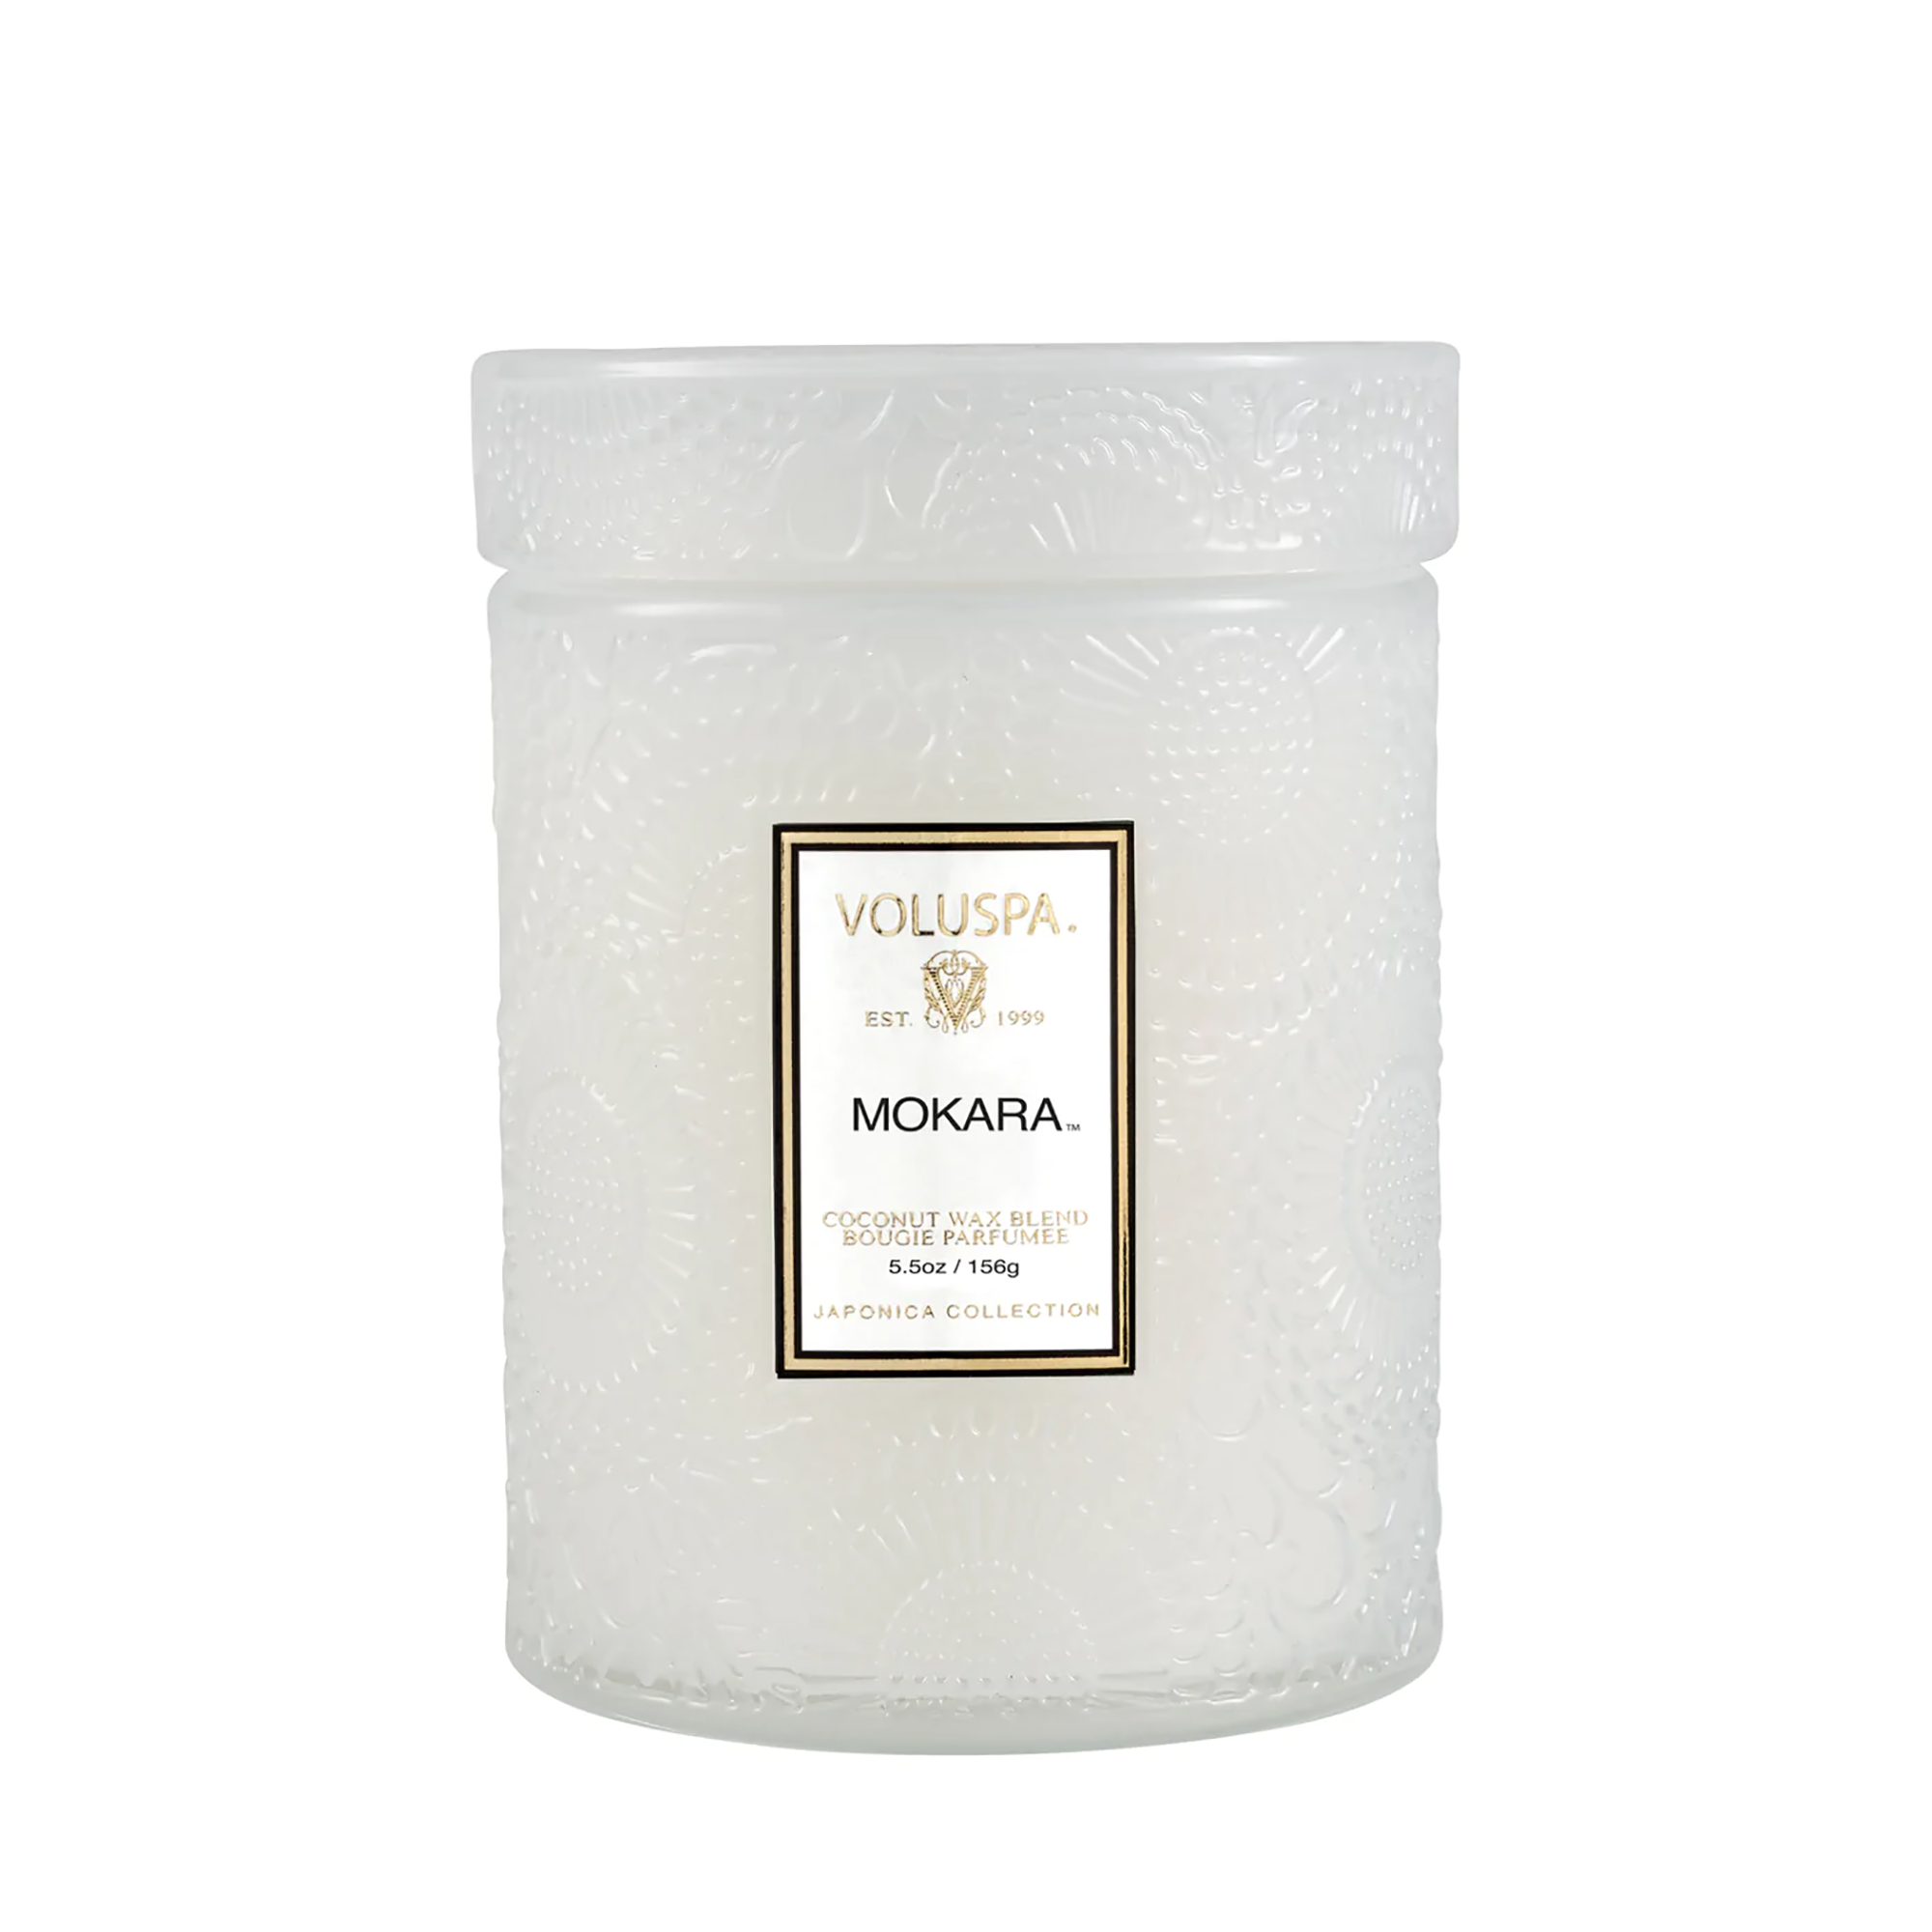 Voluspa Small Jar Candle / MOKARA